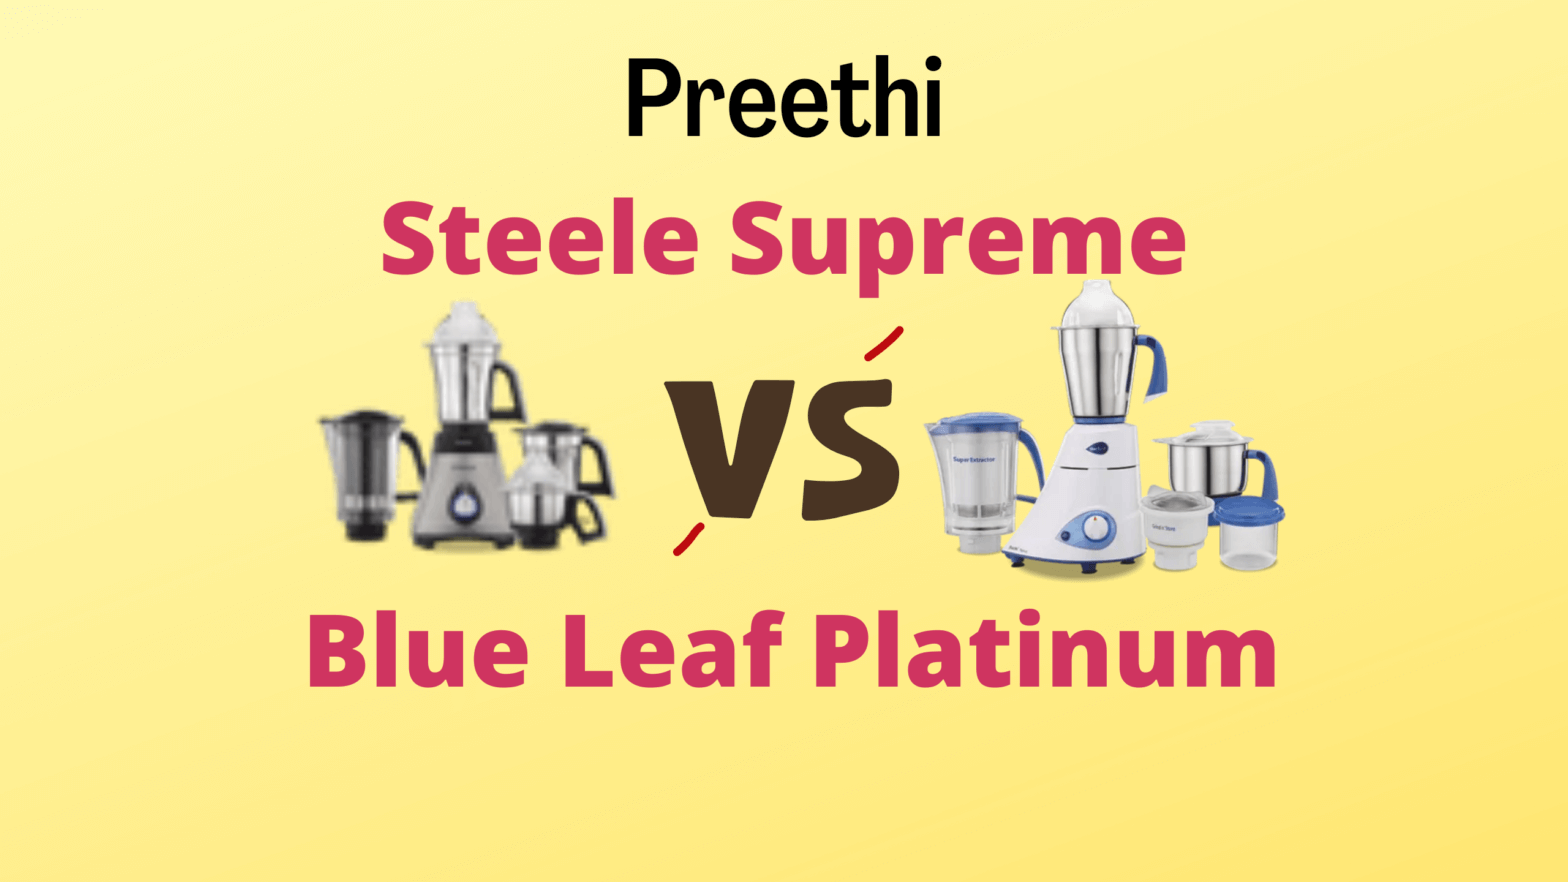 preethi steele supreme vs blue leaf